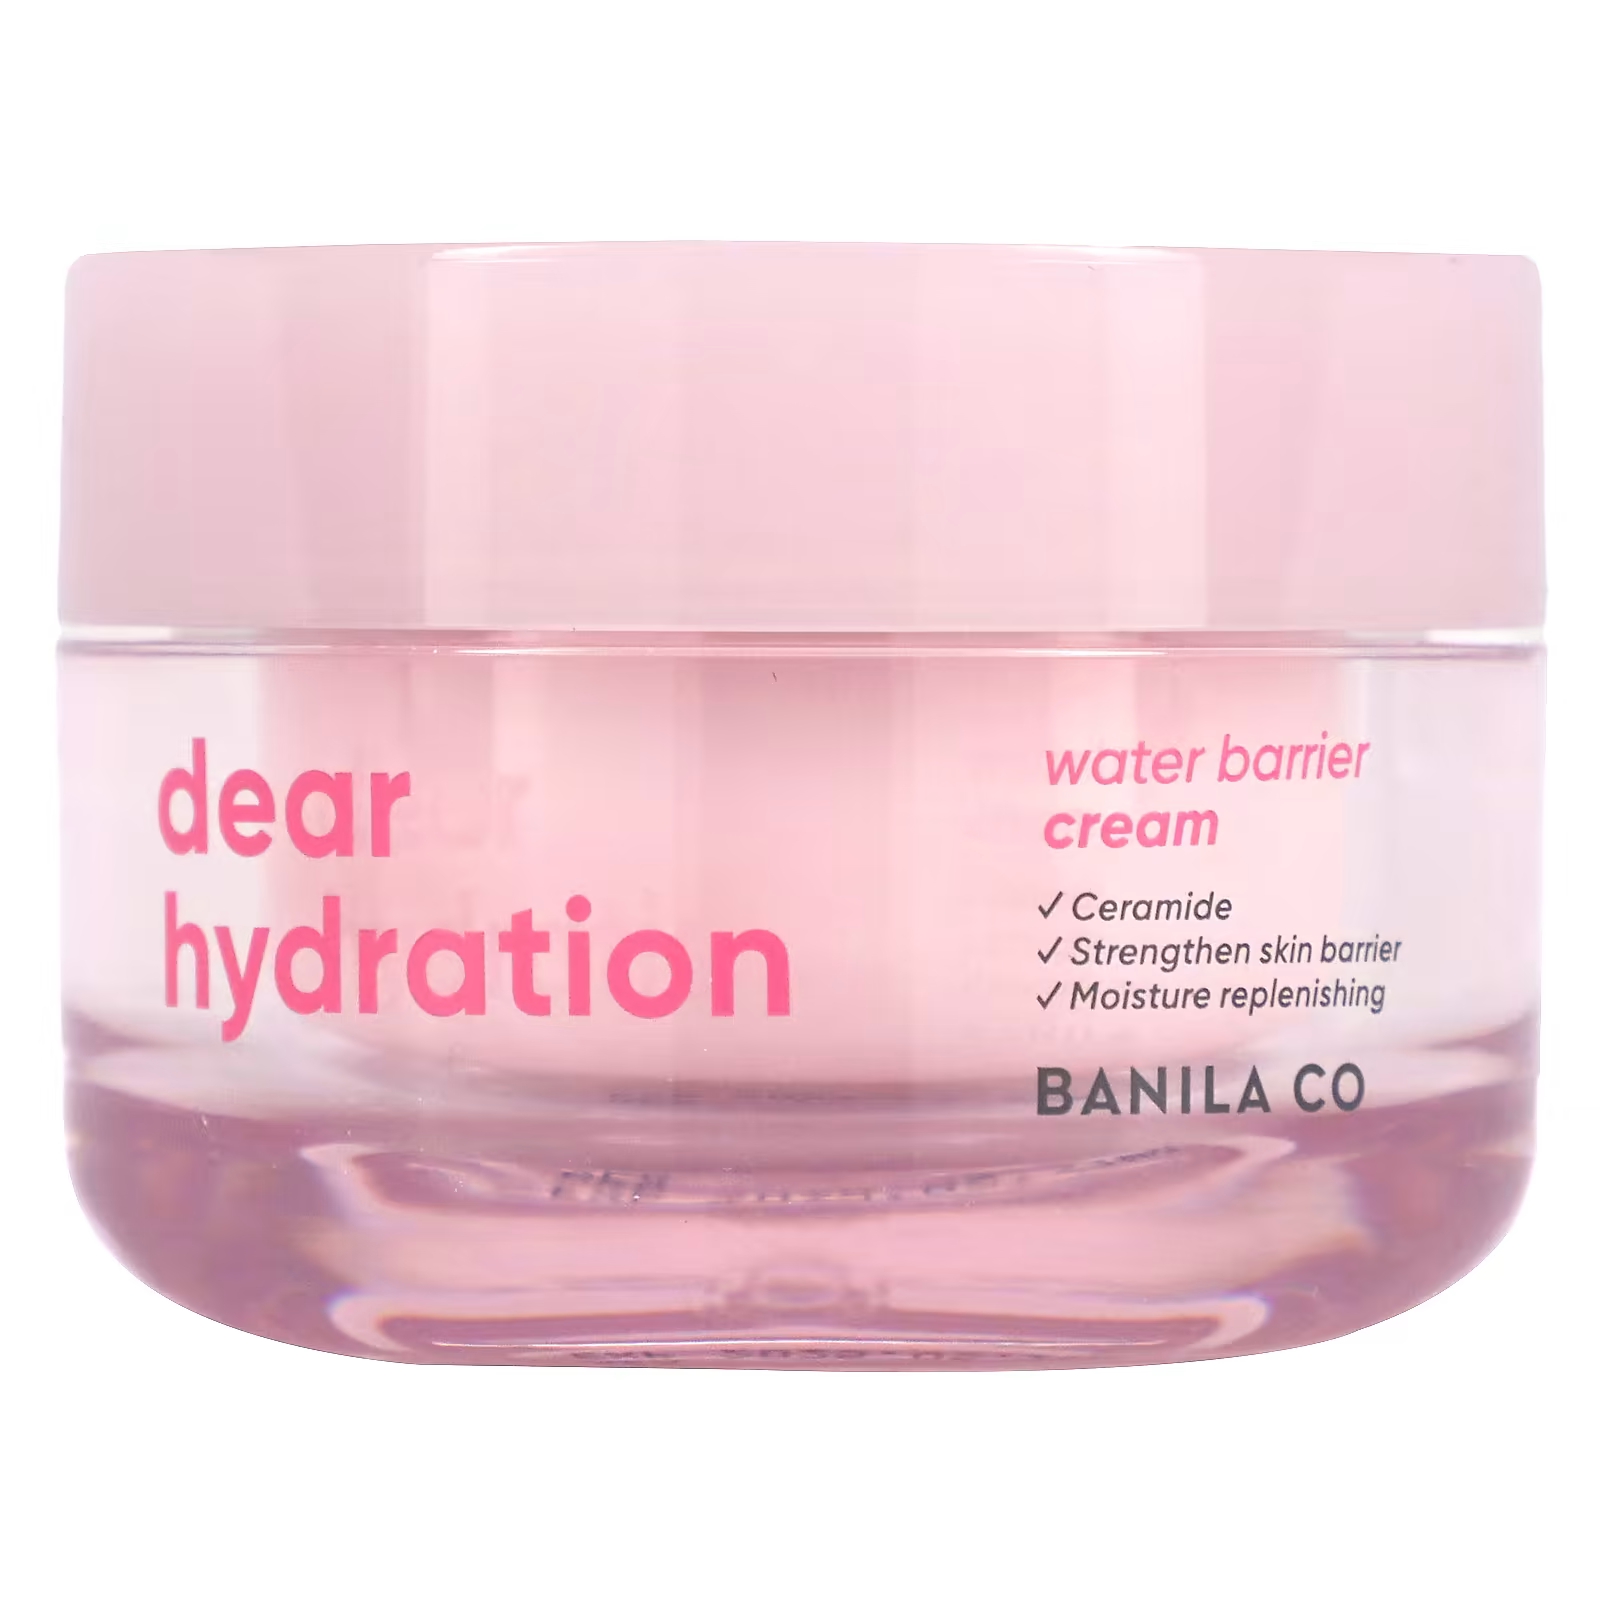 Крем Banila Co Dear Hydration увлажняющий, 50мл banila co dear hydration skin care starter kit набор из 4 предметов